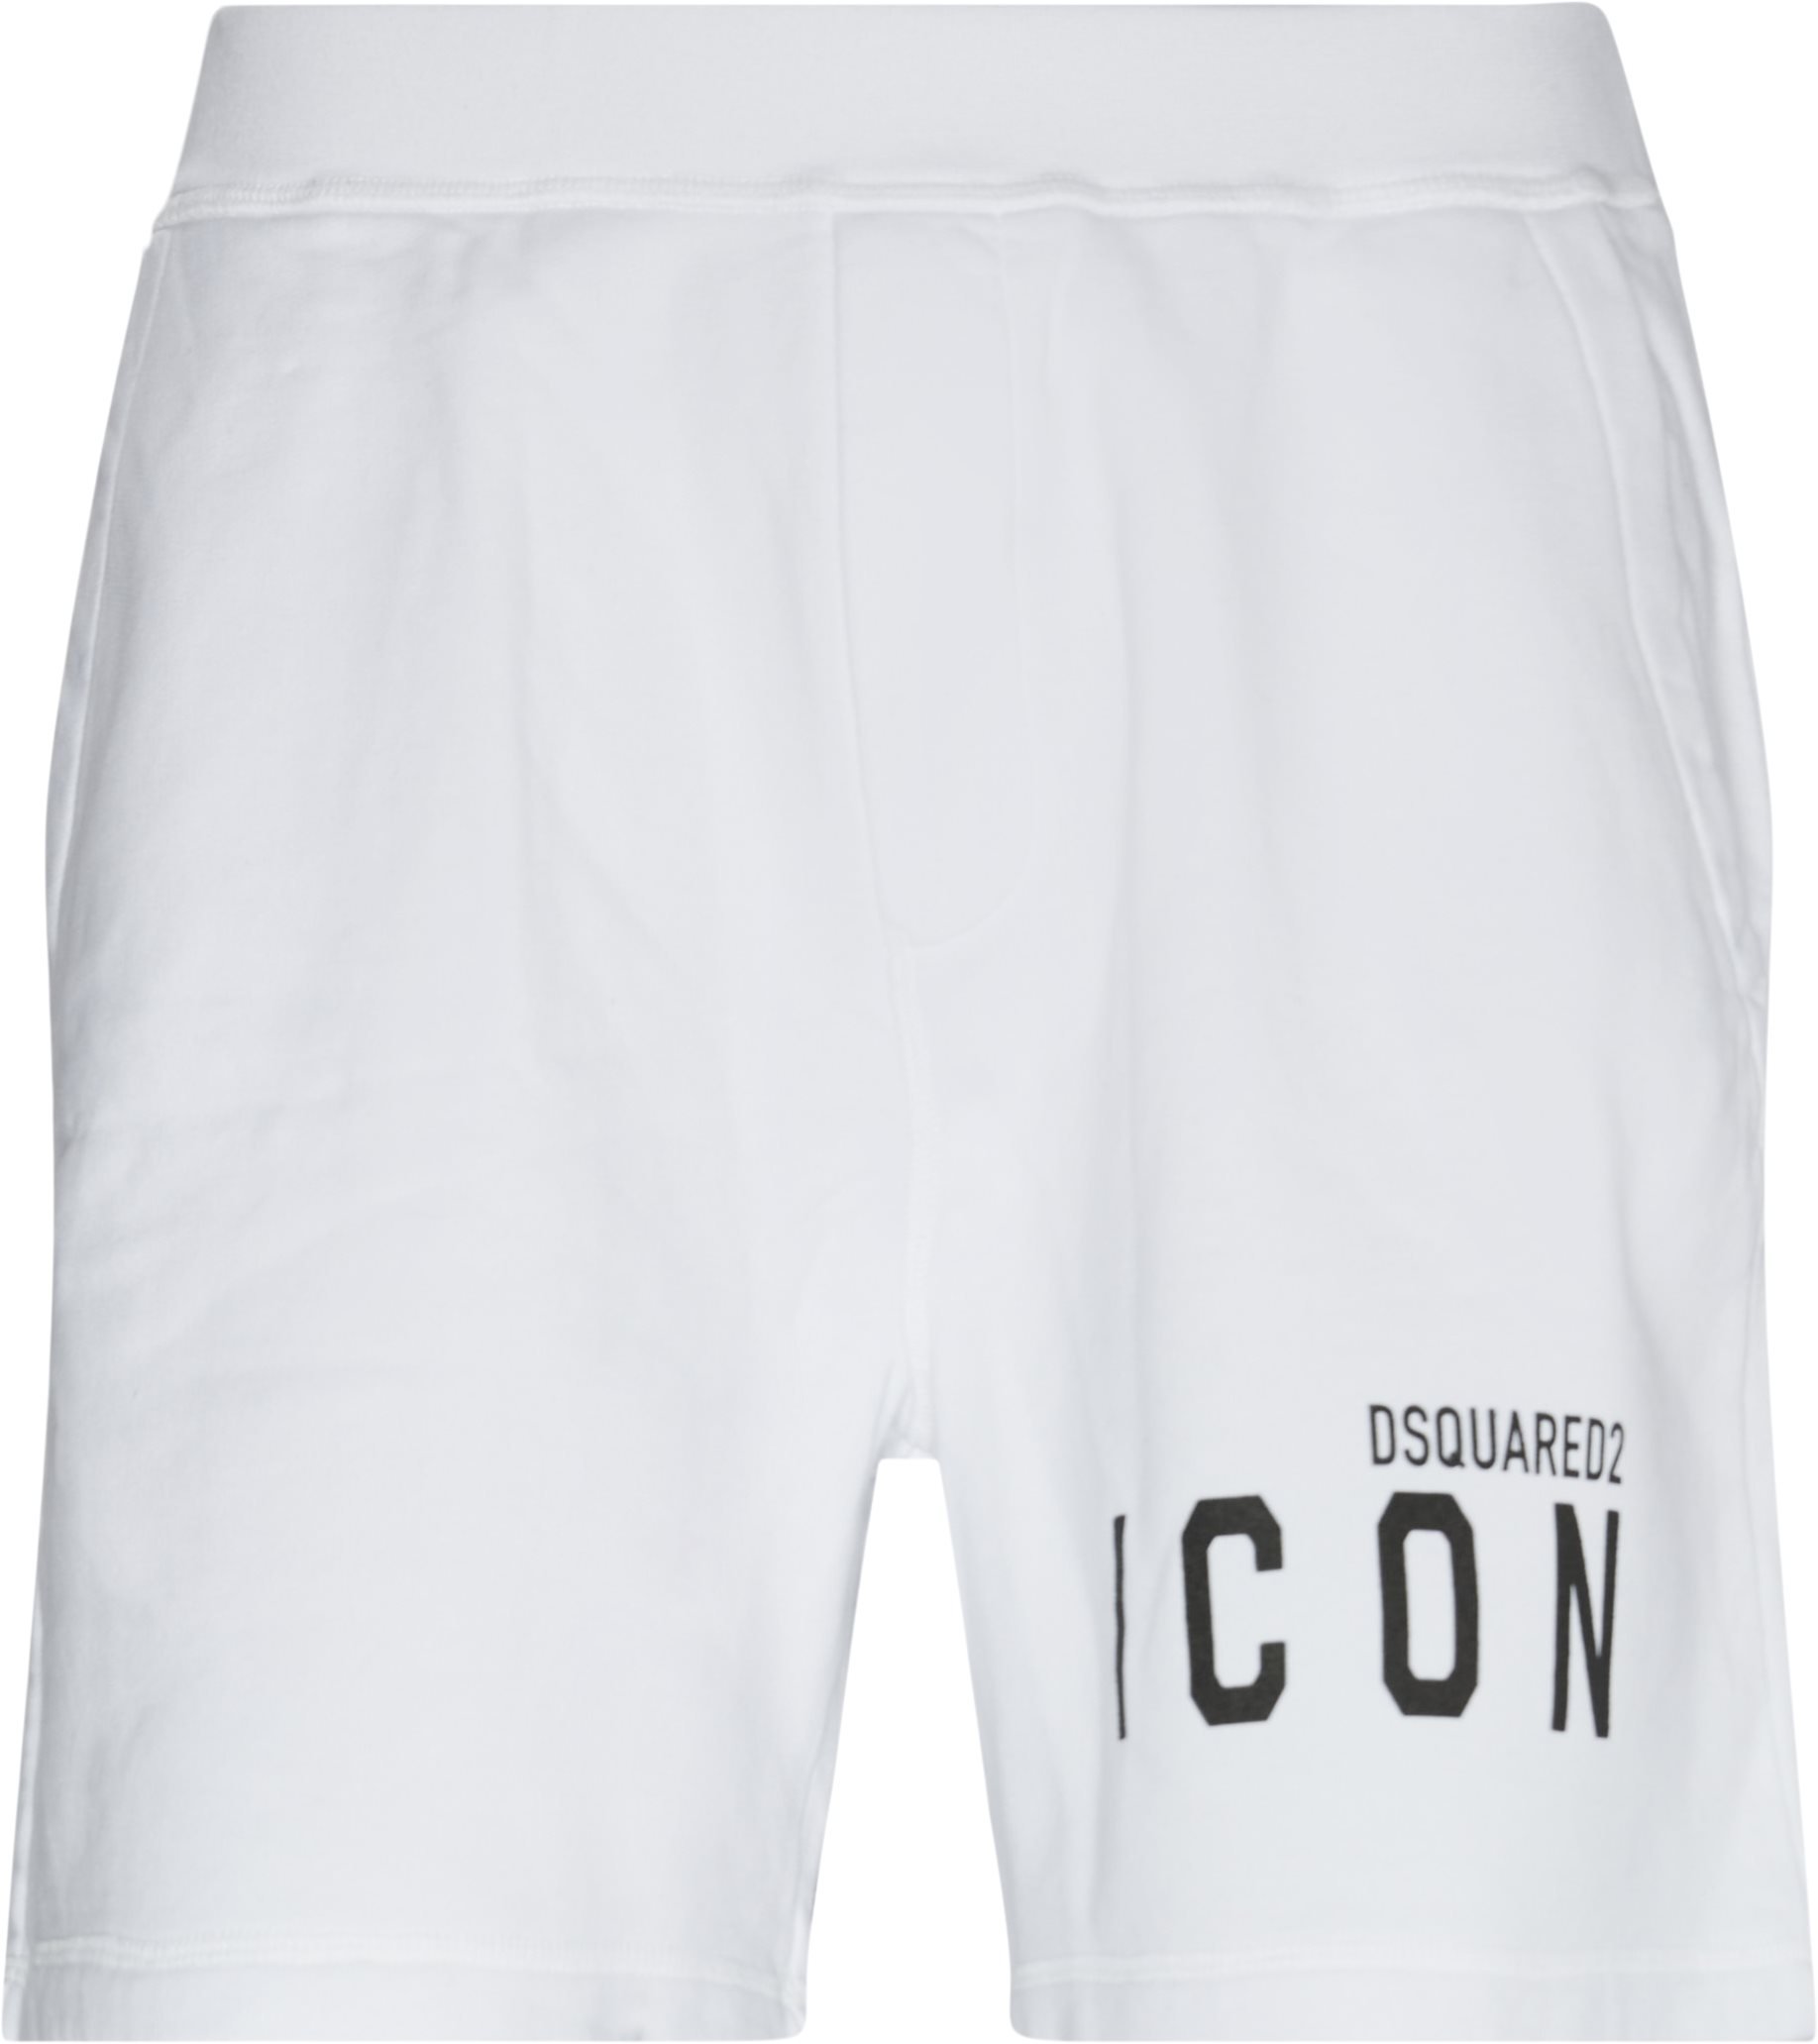 Shorts - Regular fit - White